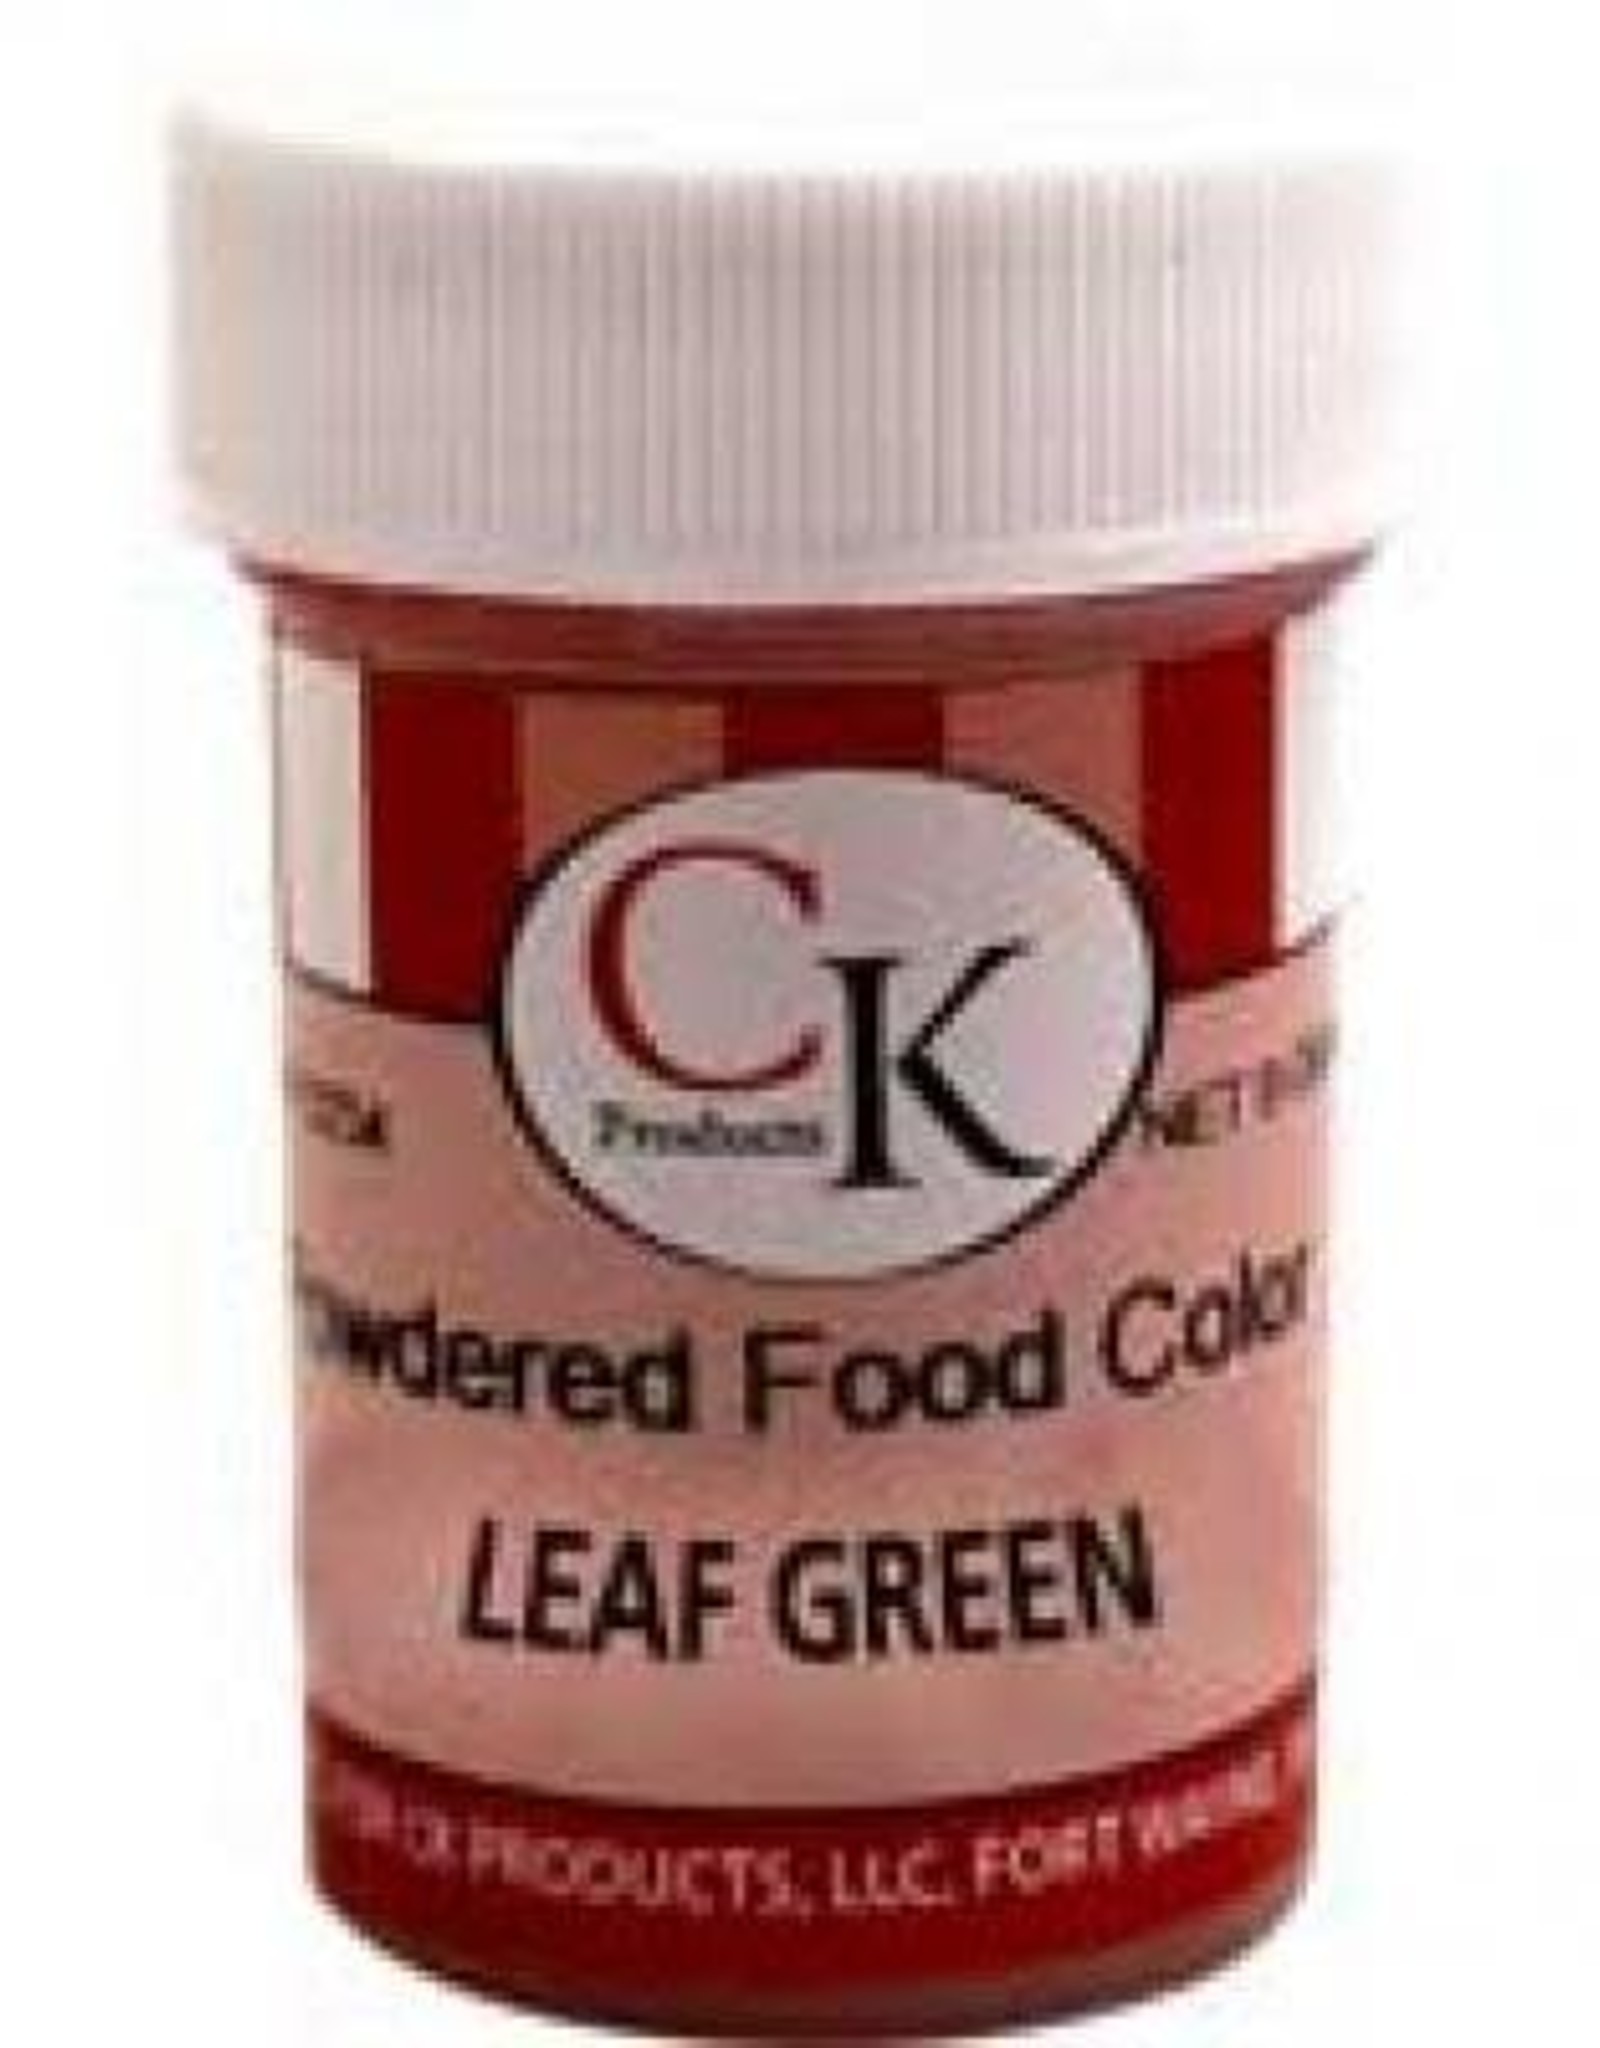 Leaf Green Powder Food Coloring (9 Grams)